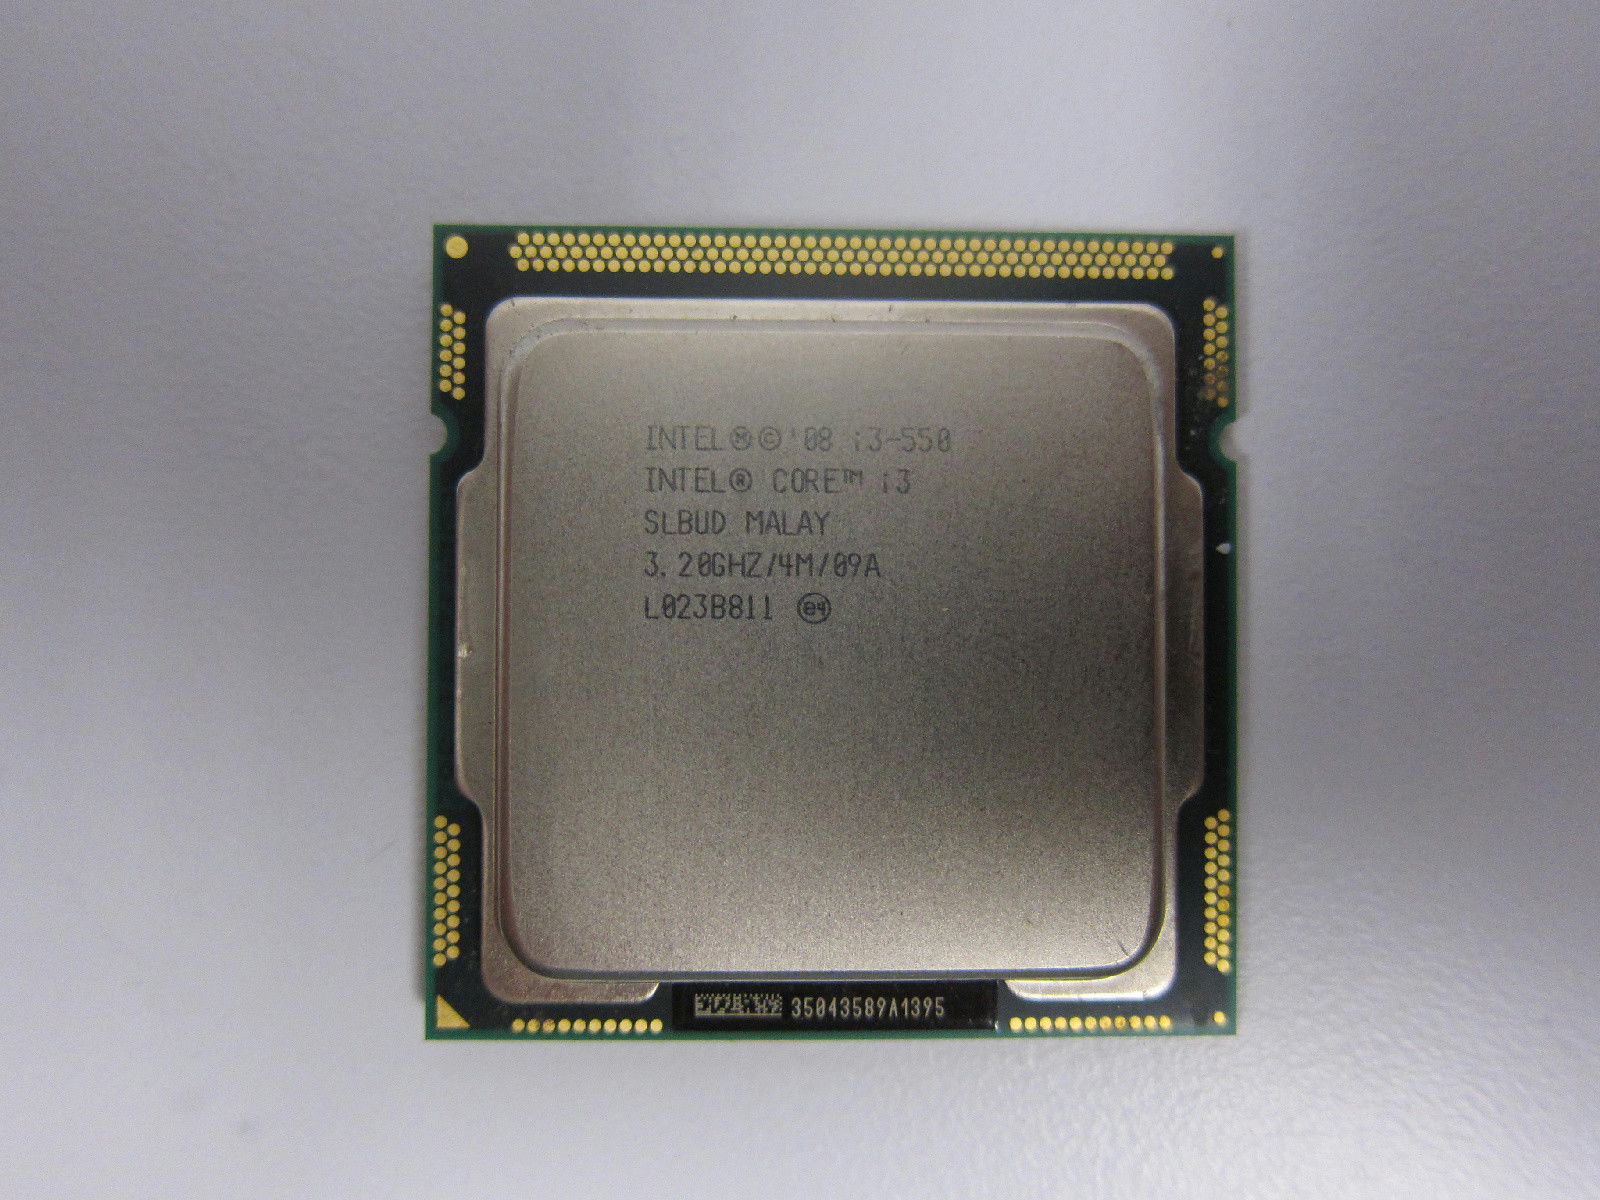 Intel i3-550 Clarkdale 3.2GHz Socket LGA 1156 73W Dual-Core (SLBUD) Desktop Processor.